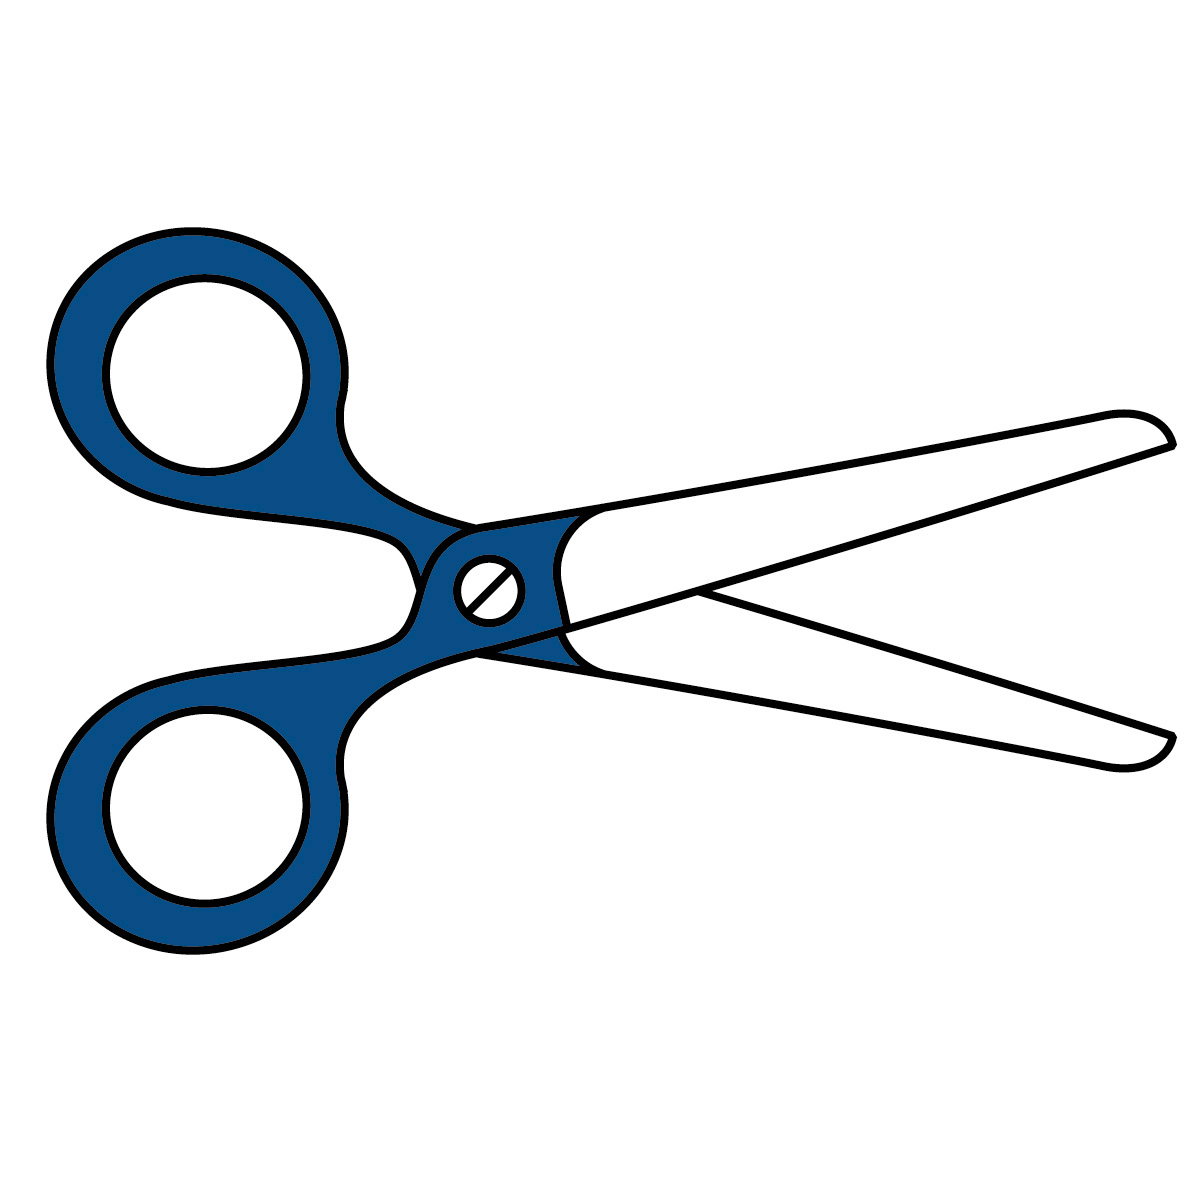 scissors-clip-art-scissors-clip-art-5.jpg